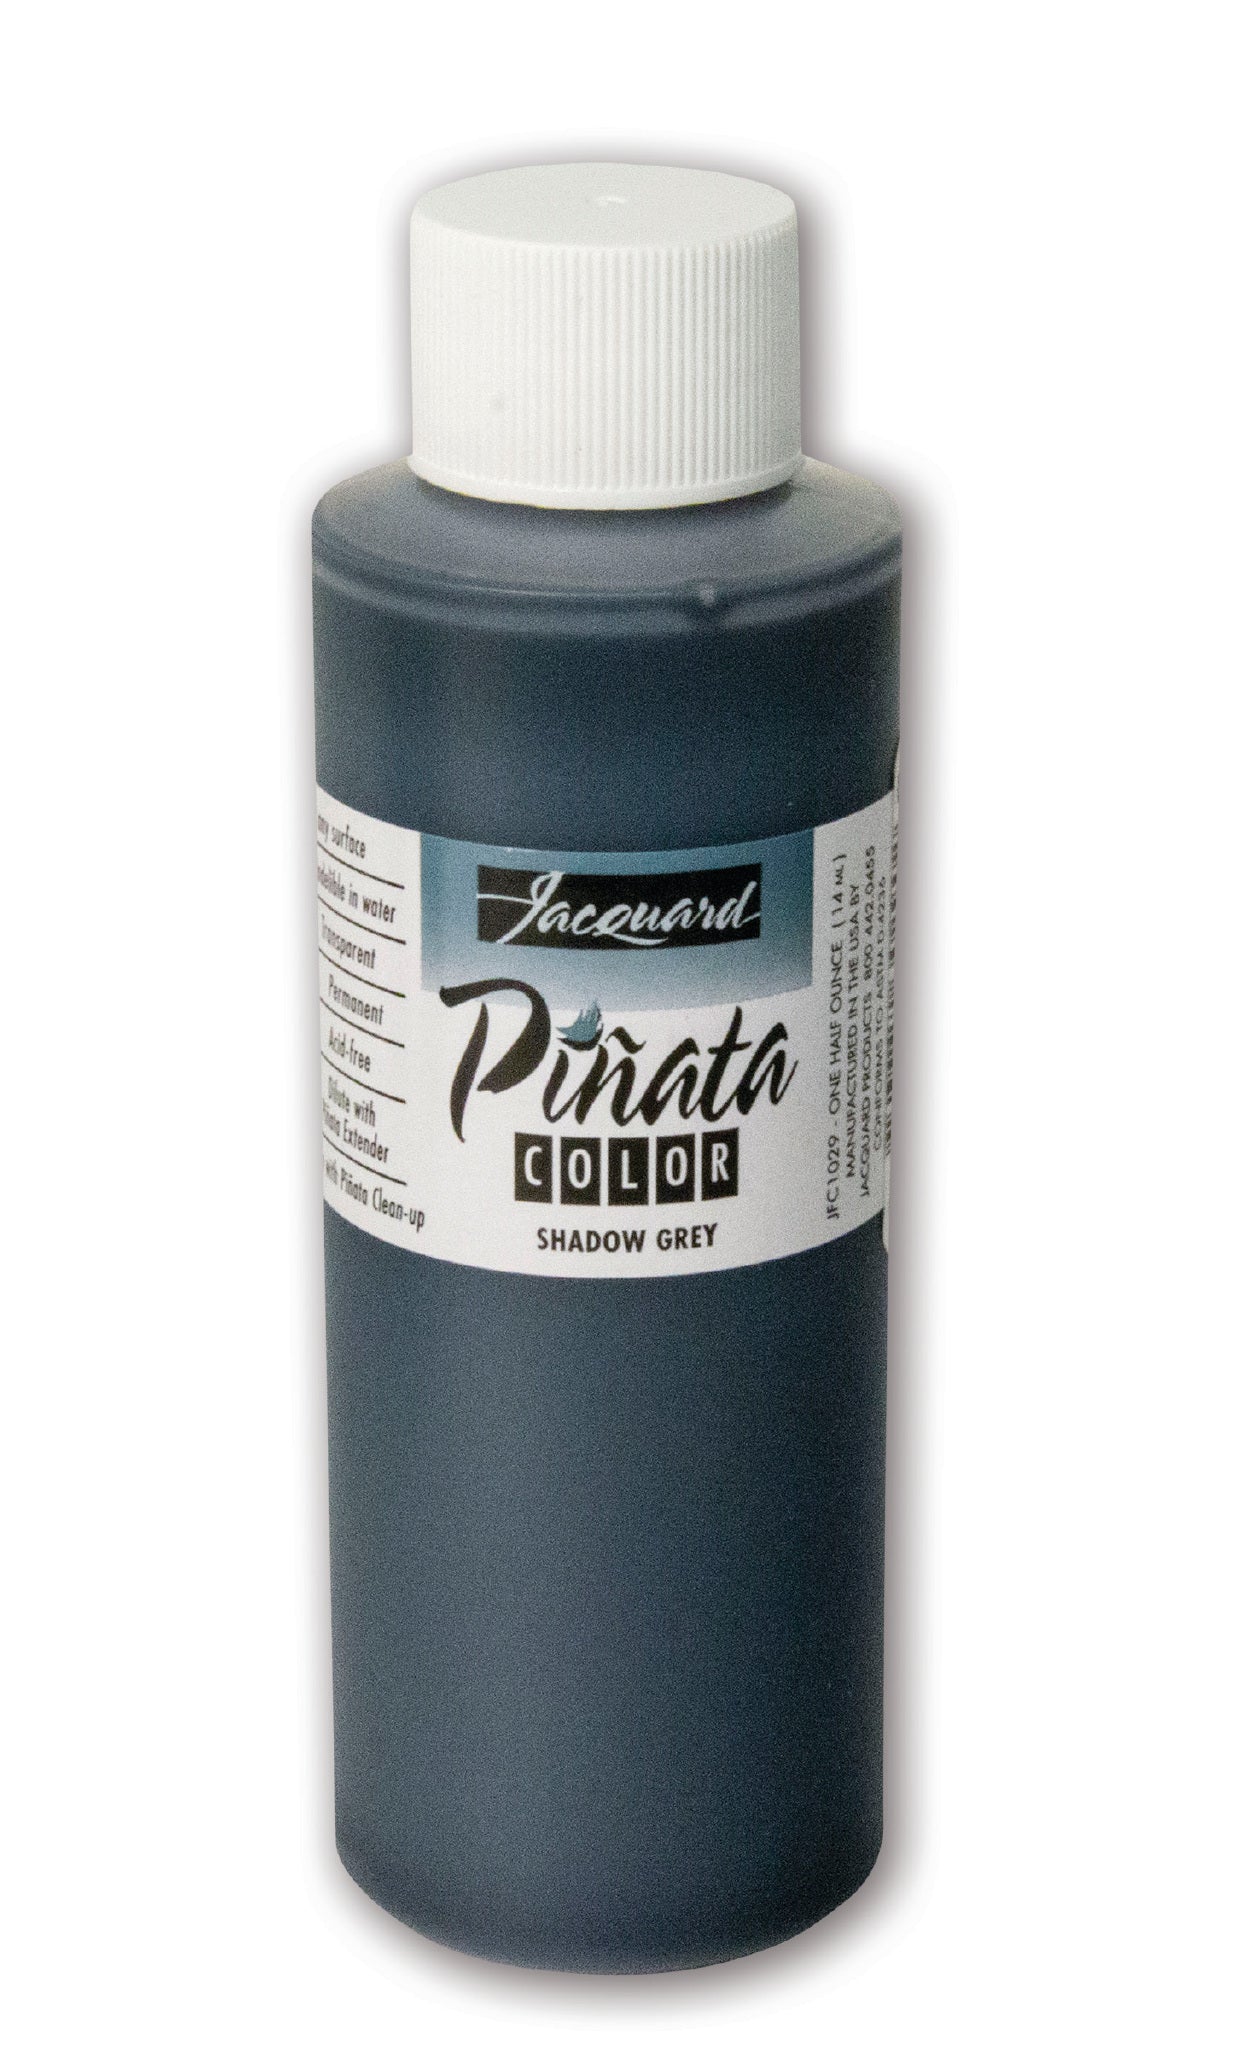 Jacquard Pinata Ink 120ml Shadow Grey - theartshop.com.au